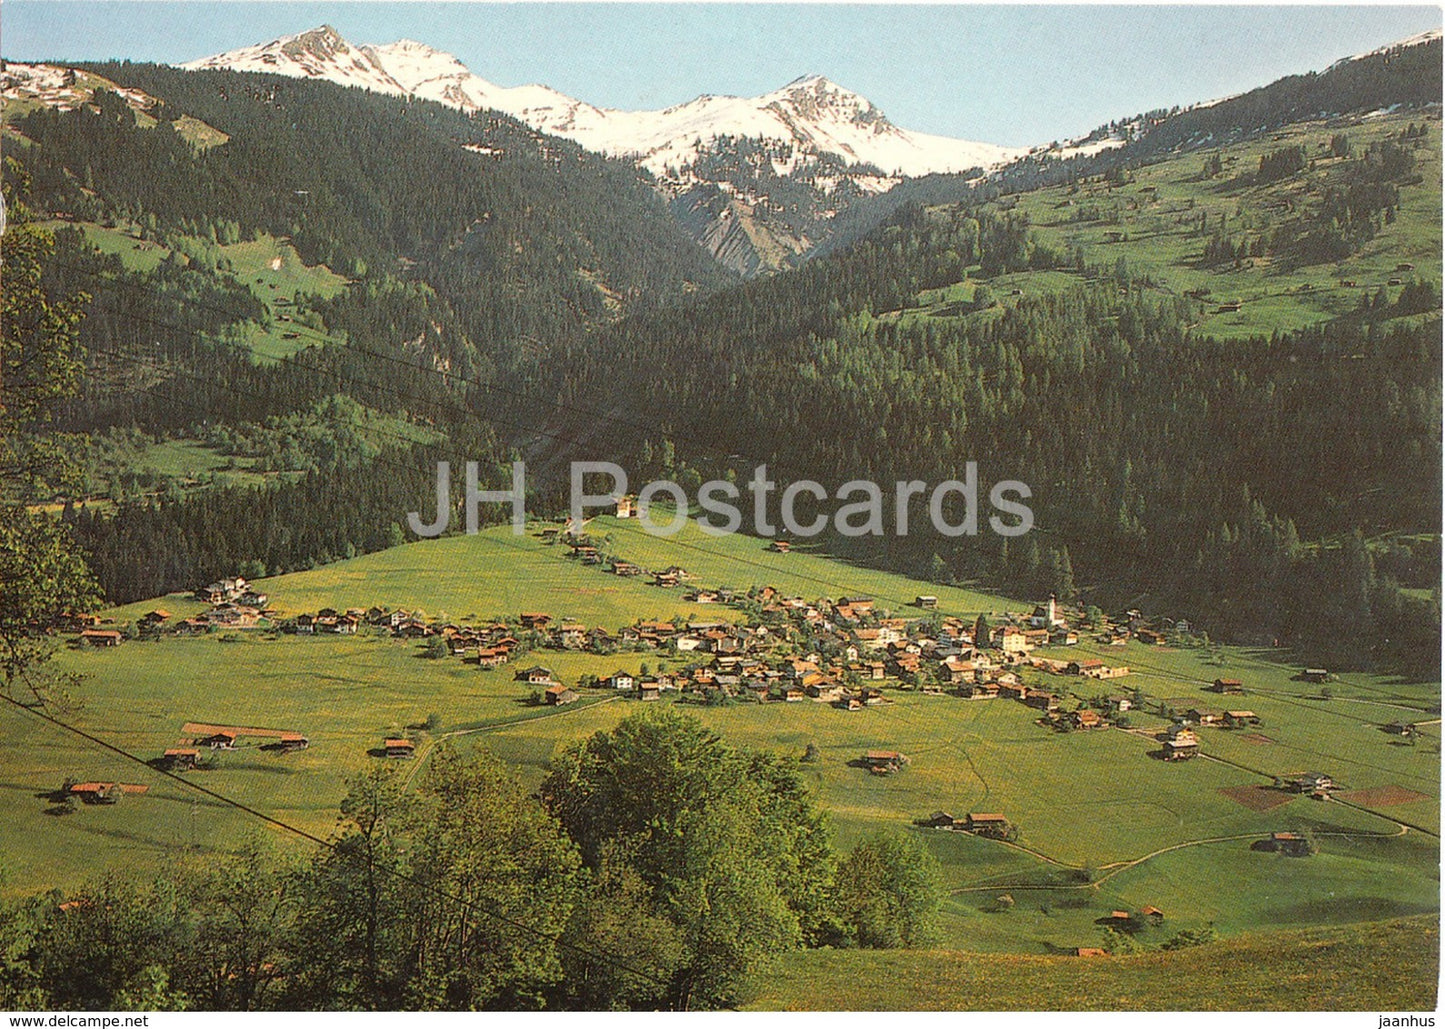 Fideris 900 m gegen die Heuberge - 1986 - Switzerland - used - JH Postcards